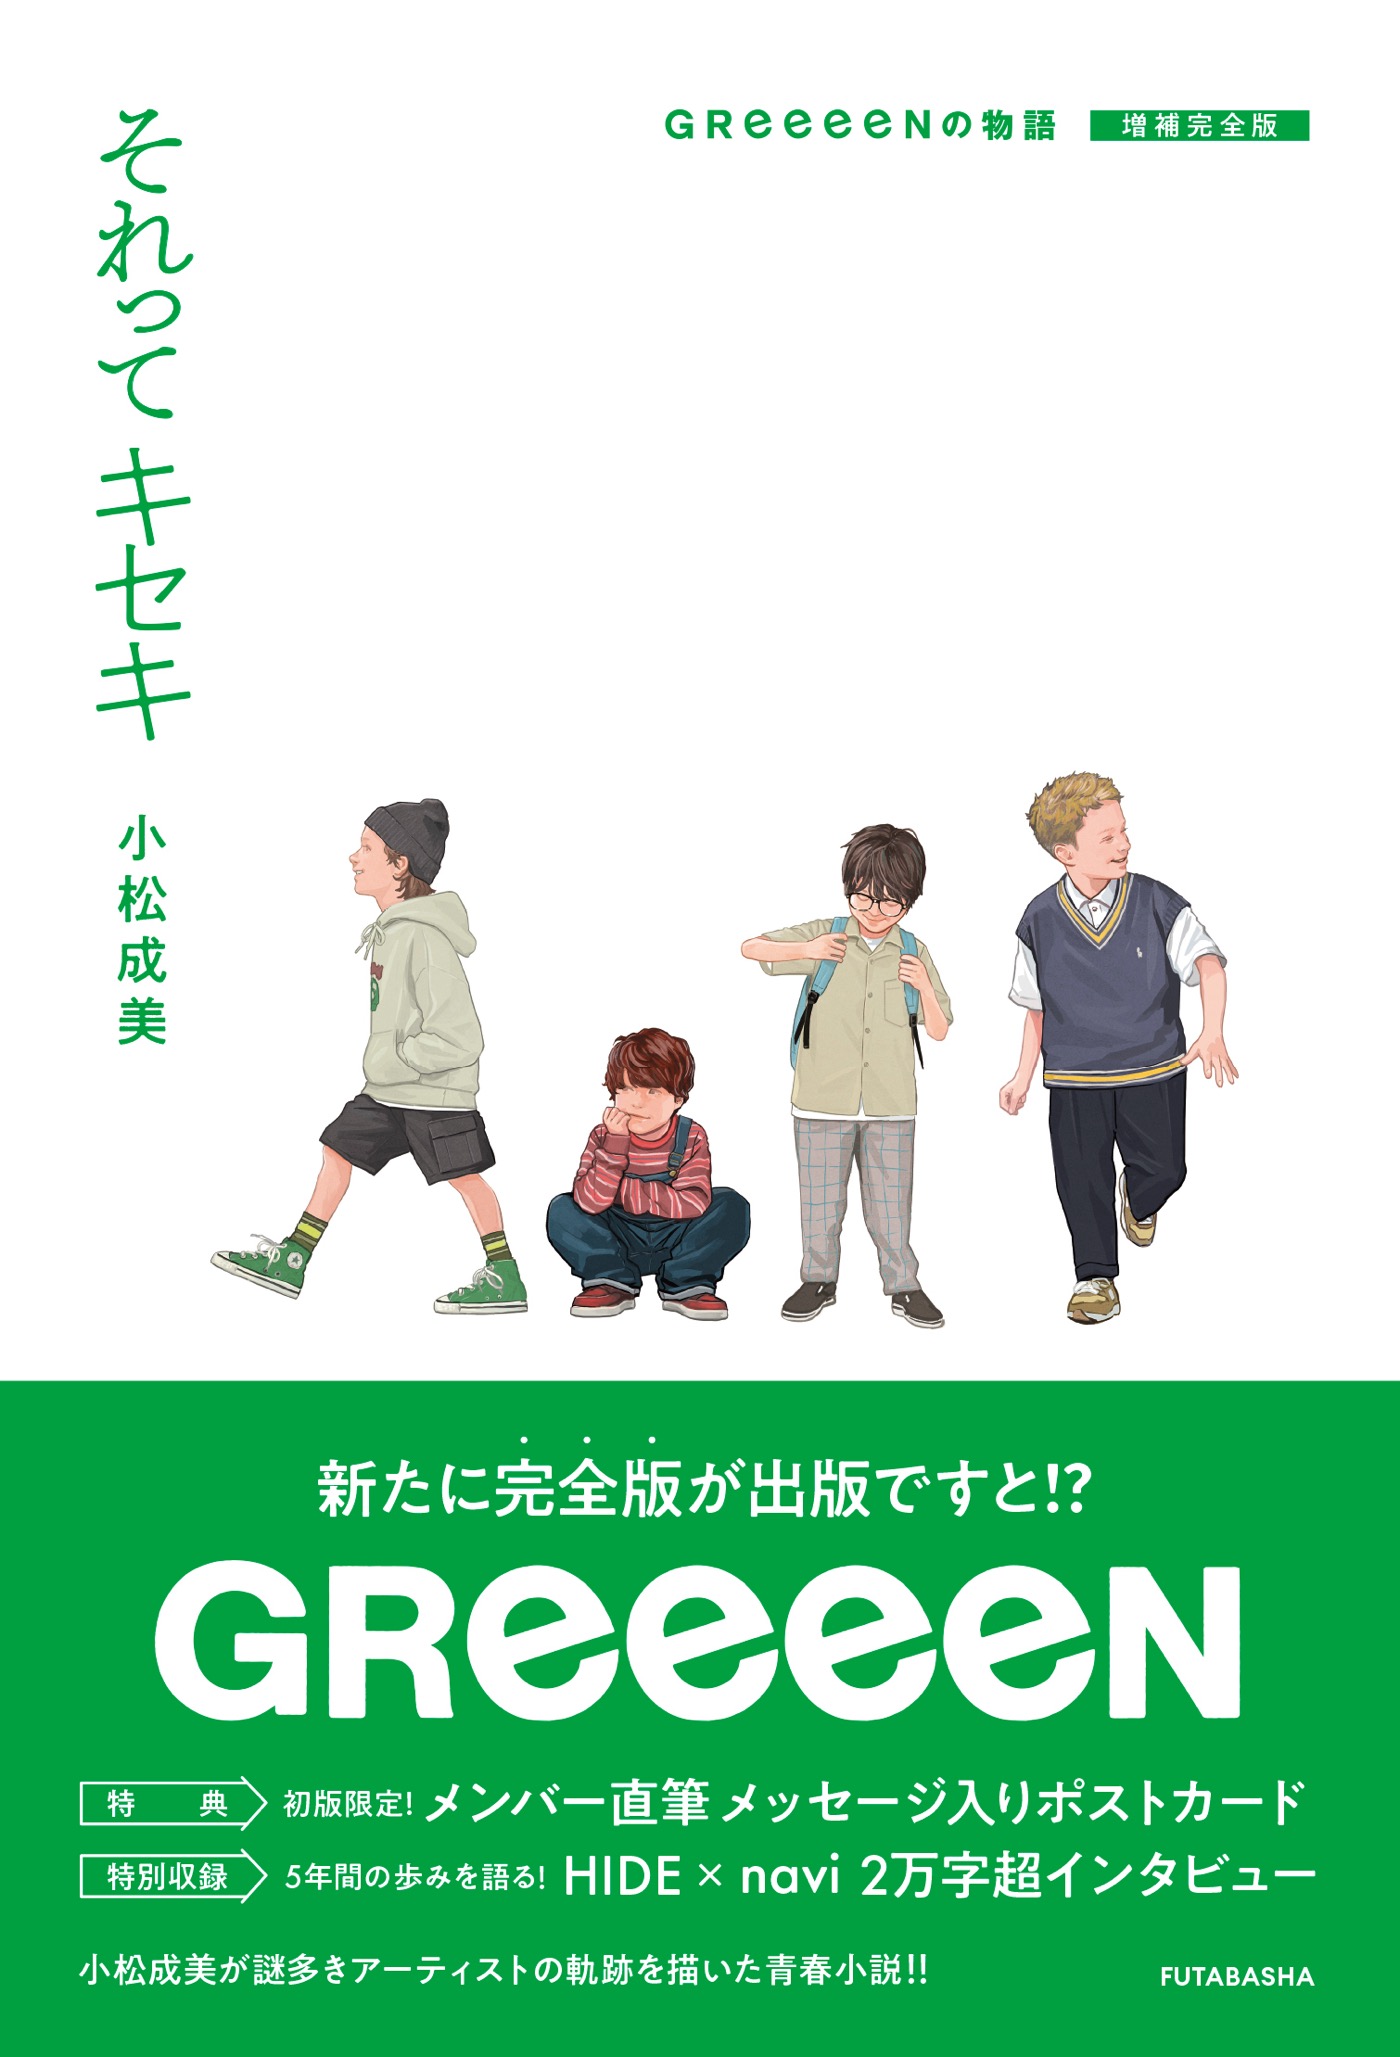 GReeeeNの青春長編小説『それってキセキ GReeeeNの物語  増補完全版』の刊行が決定